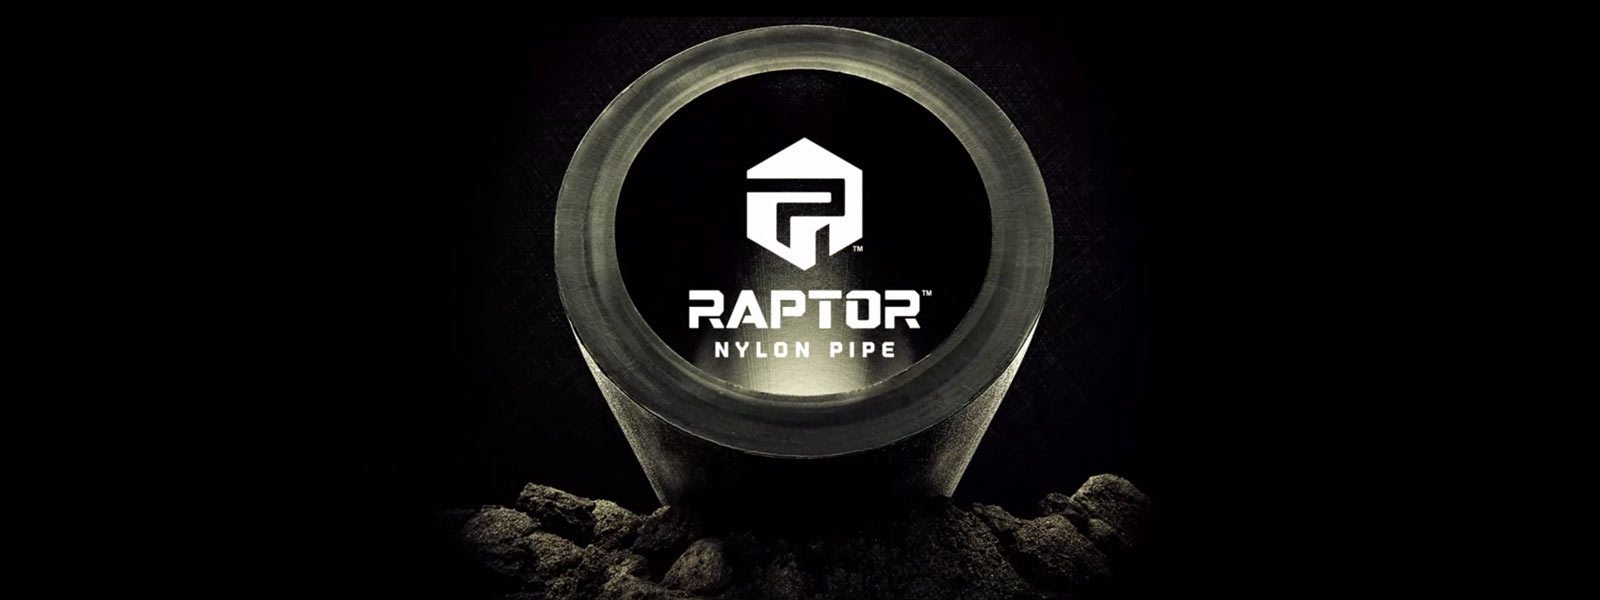 INVISTA Introduces Raptor™ Nylon Pipe